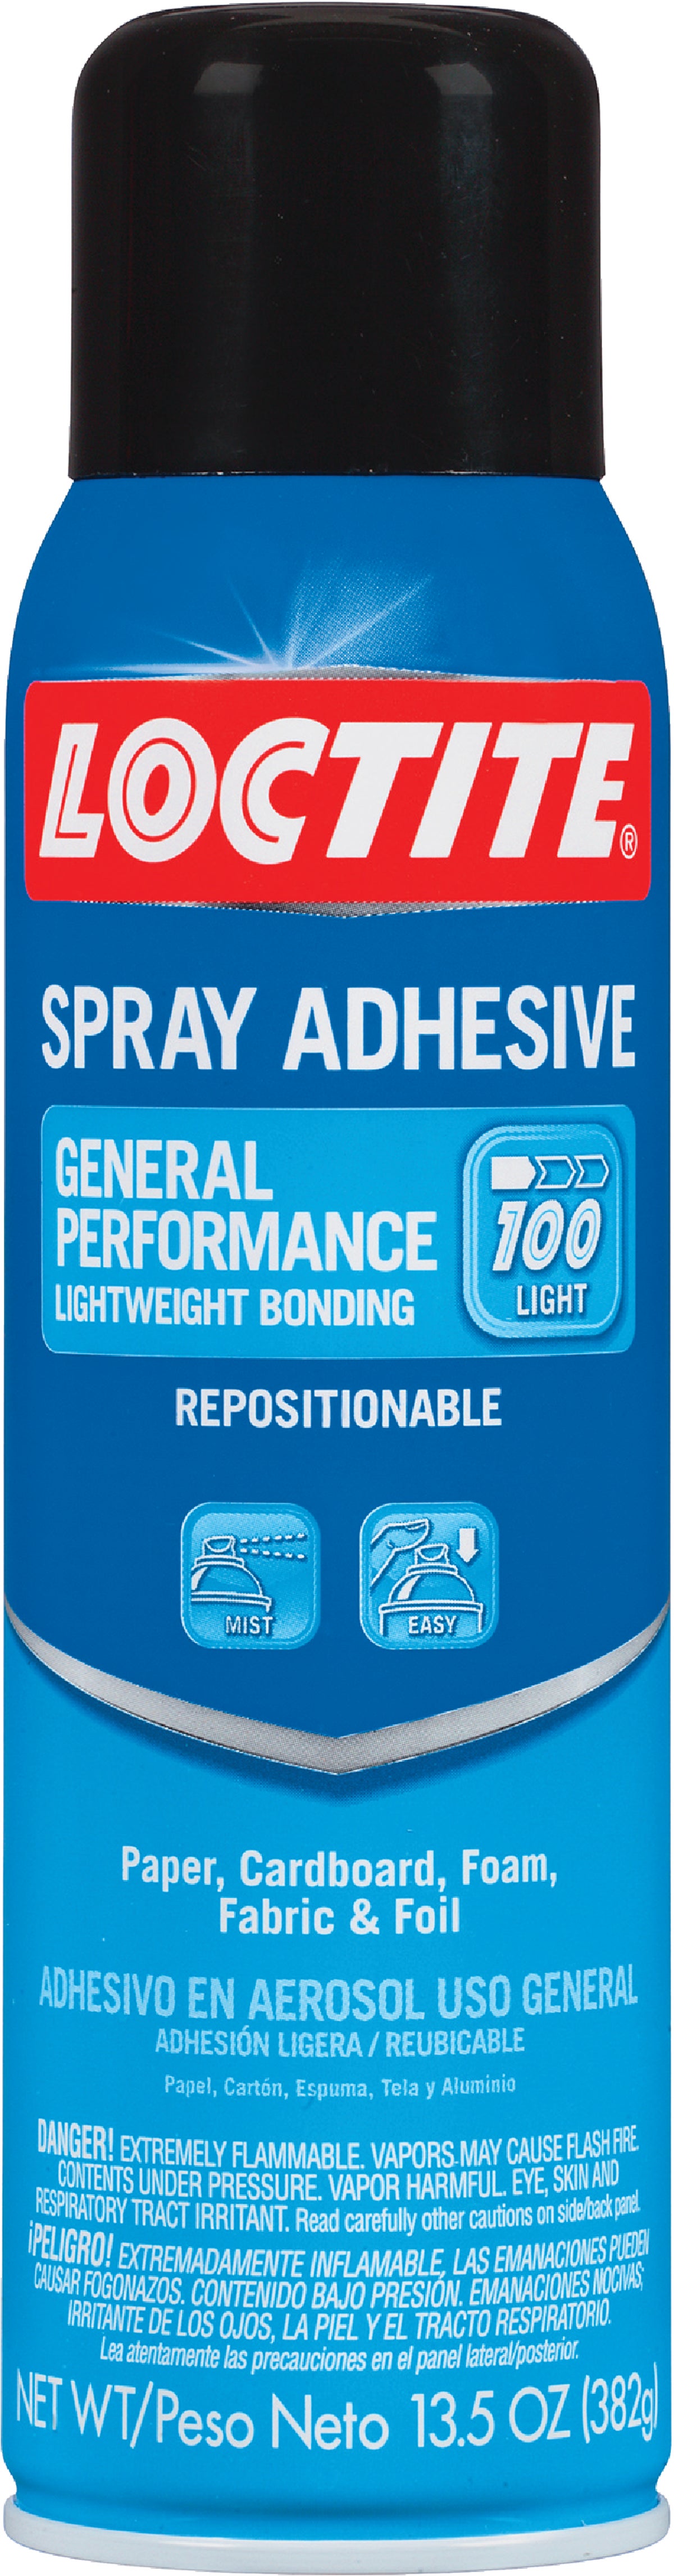 General performance. Loctite 200 клей спрей. Loctite 200 клей спрей артикул. Loctite Spray Adhesive professional Performance. Loctite Spray Adhesive.